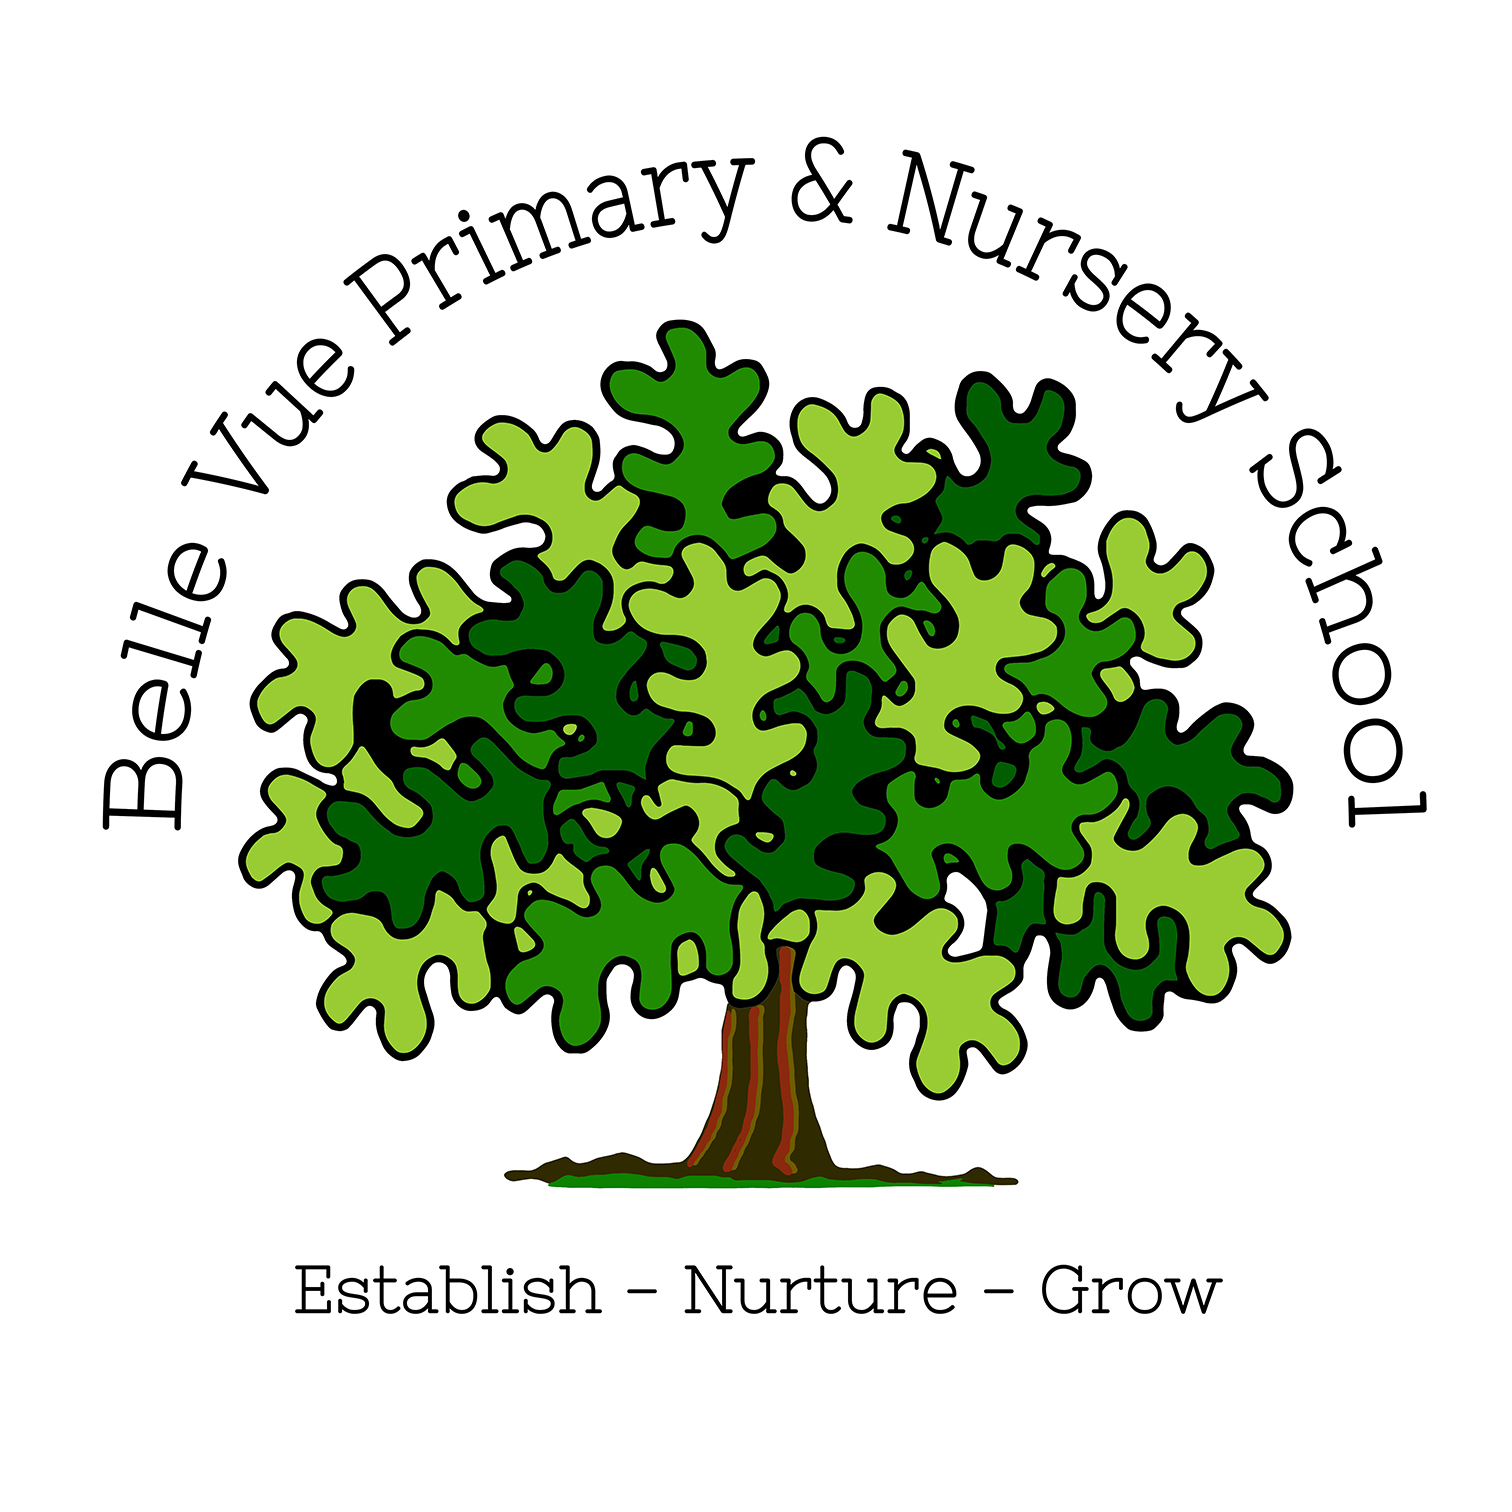 Belle Vue Primary and Nursery School